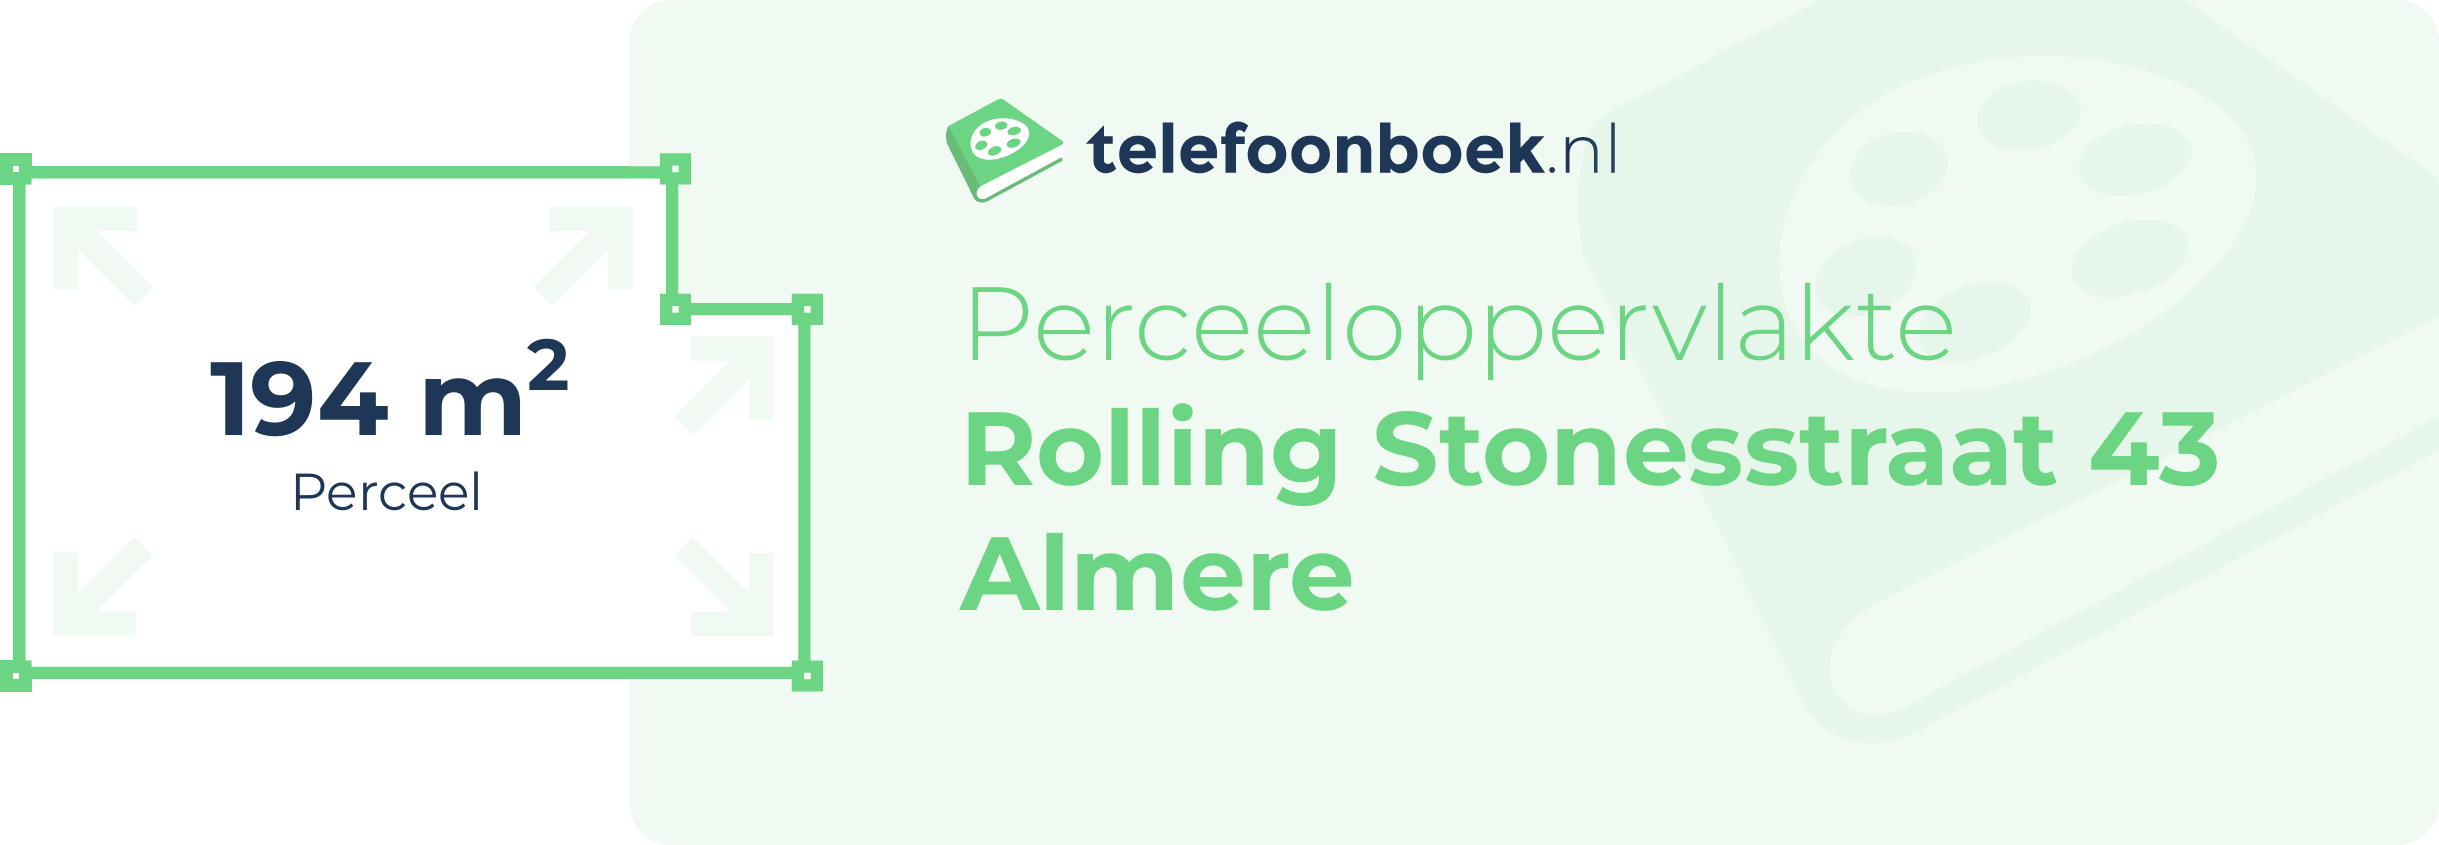 Perceeloppervlakte Rolling Stonesstraat 43 Almere